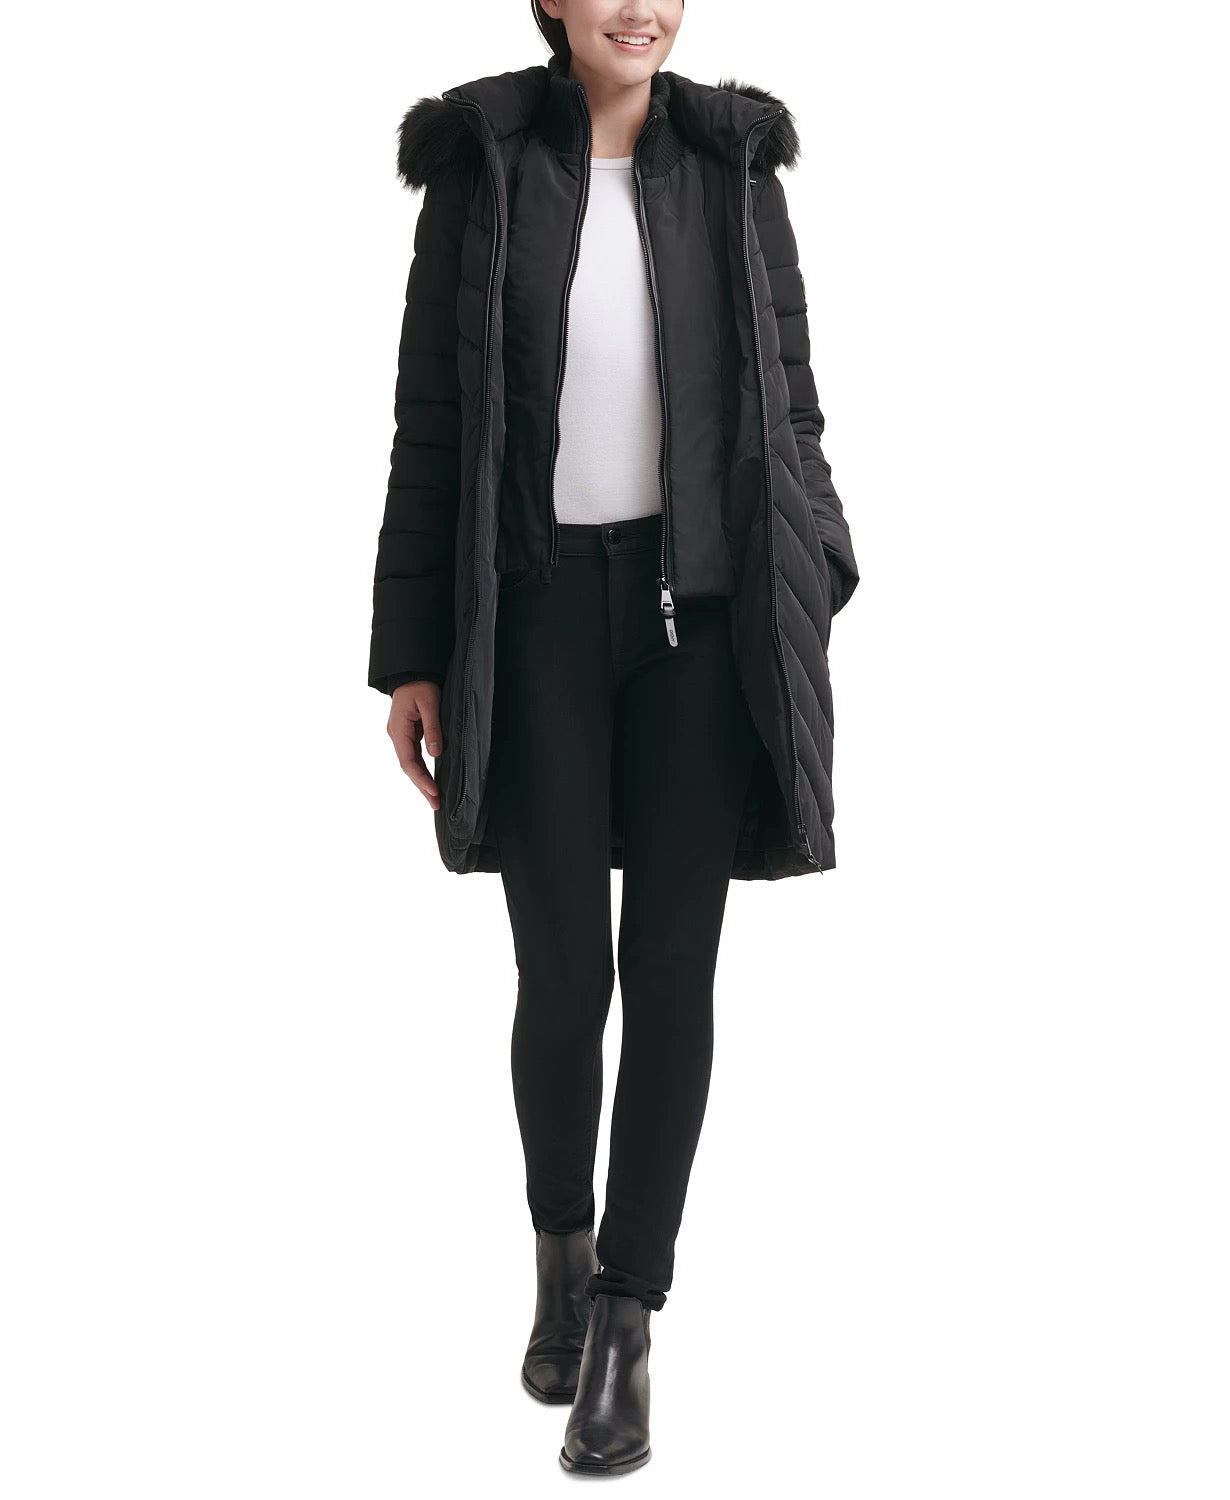 Dkny Women's Faux-Fur-Trim Hooded Puffer Coat Black XL